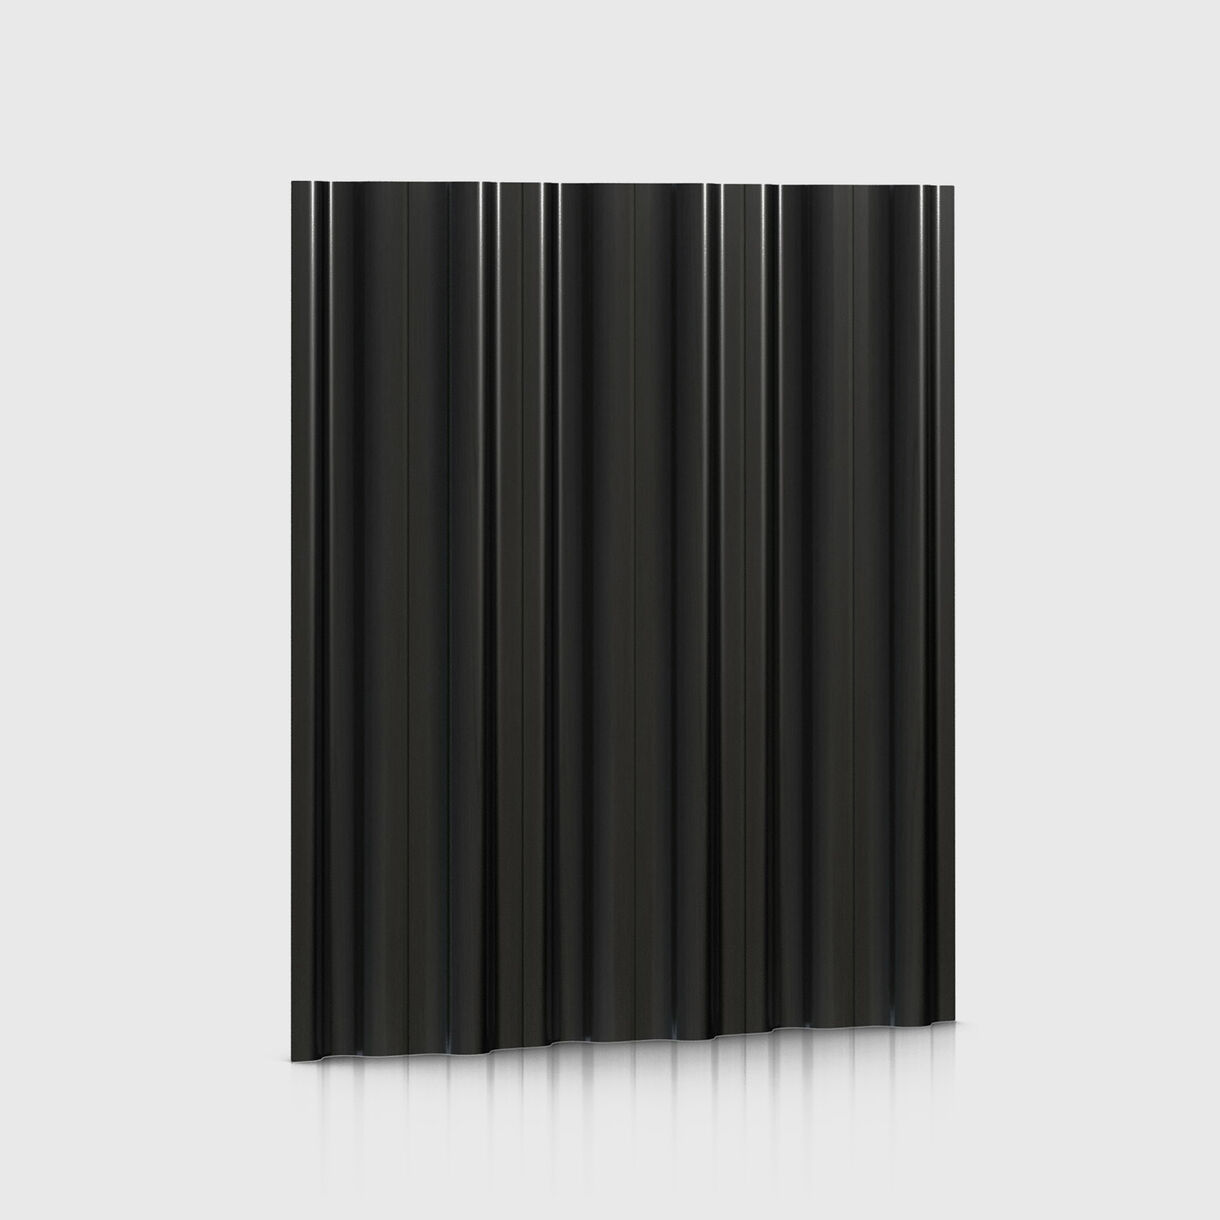 Eames Moulded Plywood Folding Screen, Ebony